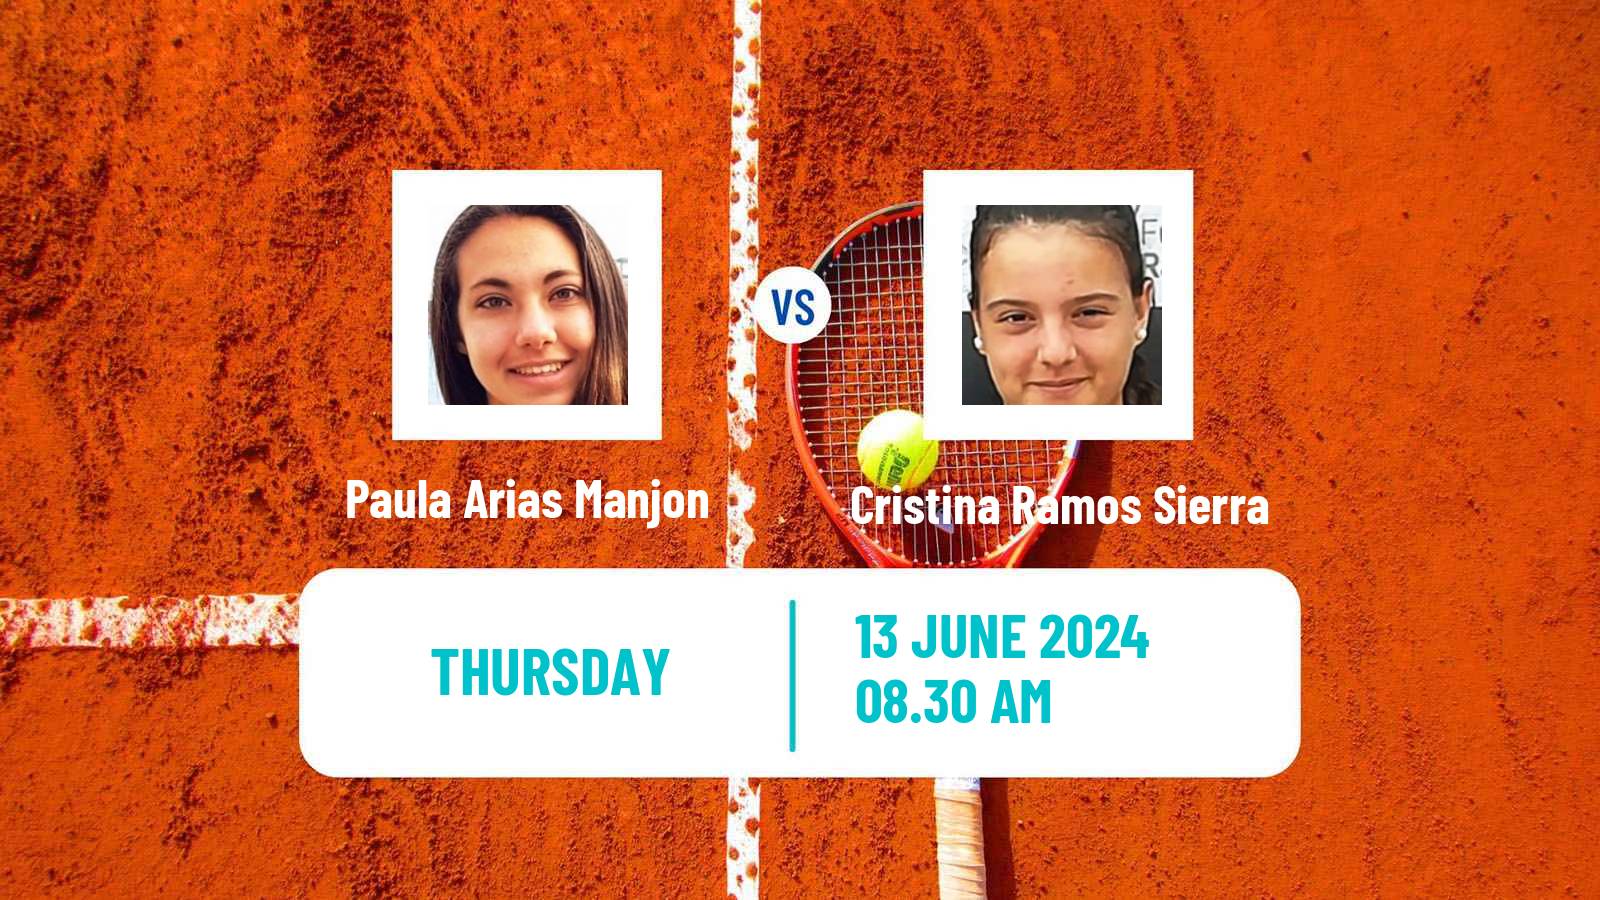 Tennis ITF W15 Madrid 2 Women Paula Arias Manjon - Cristina Ramos Sierra